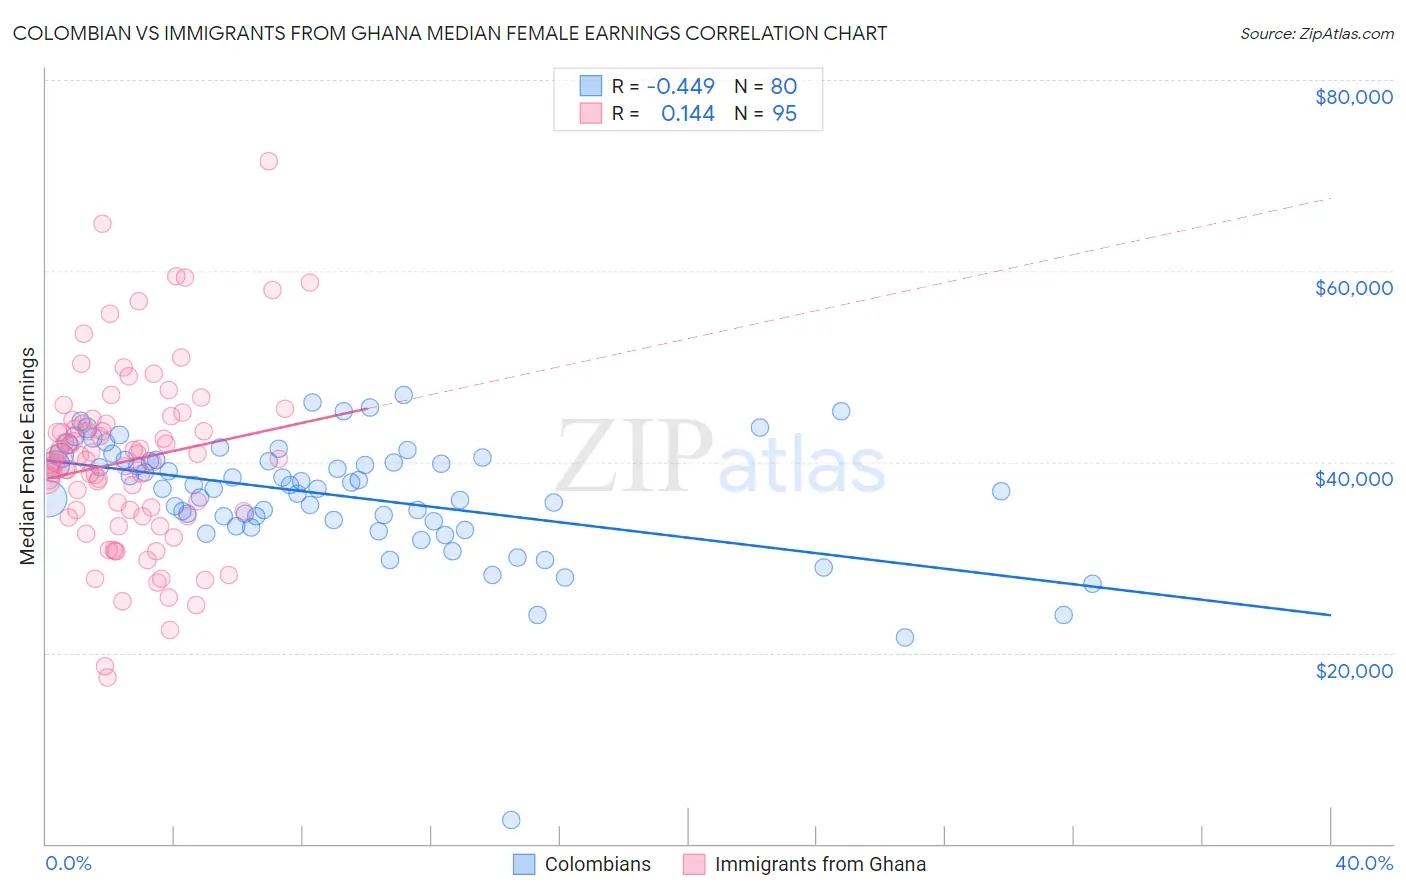 Colombian vs Immigrants from Ghana Median Female Earnings